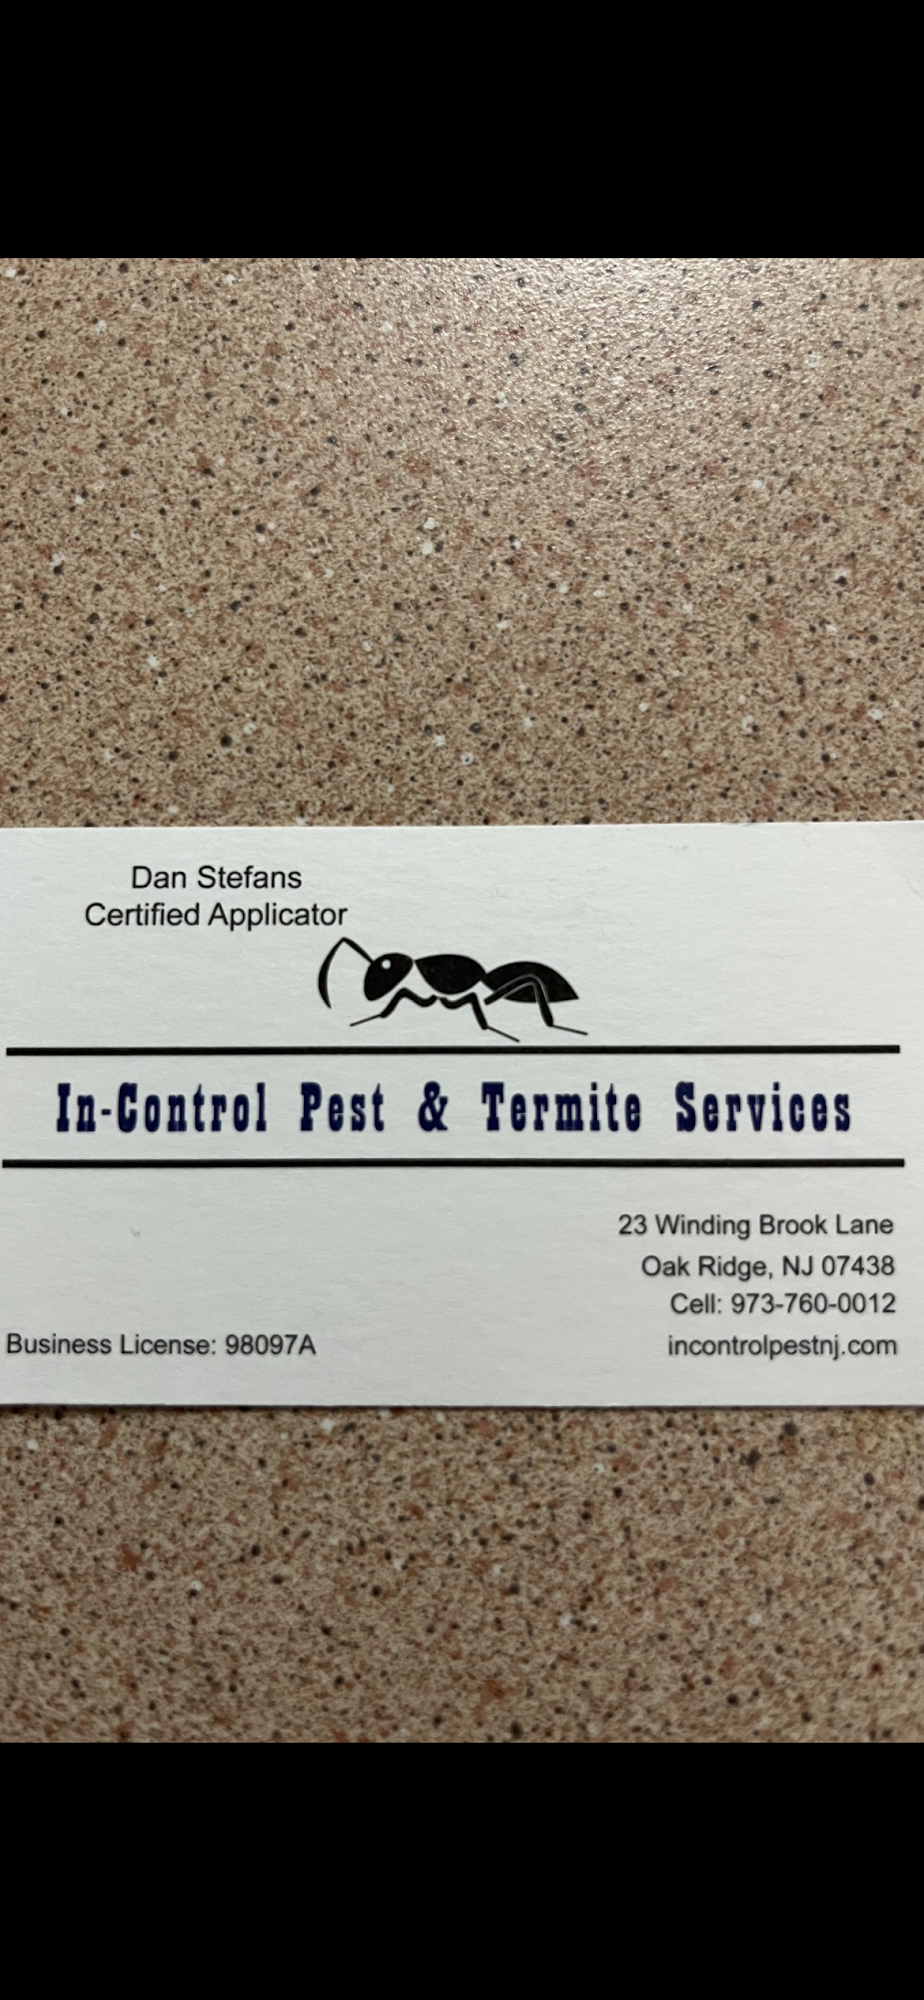 In-Control Pest & Termite Services